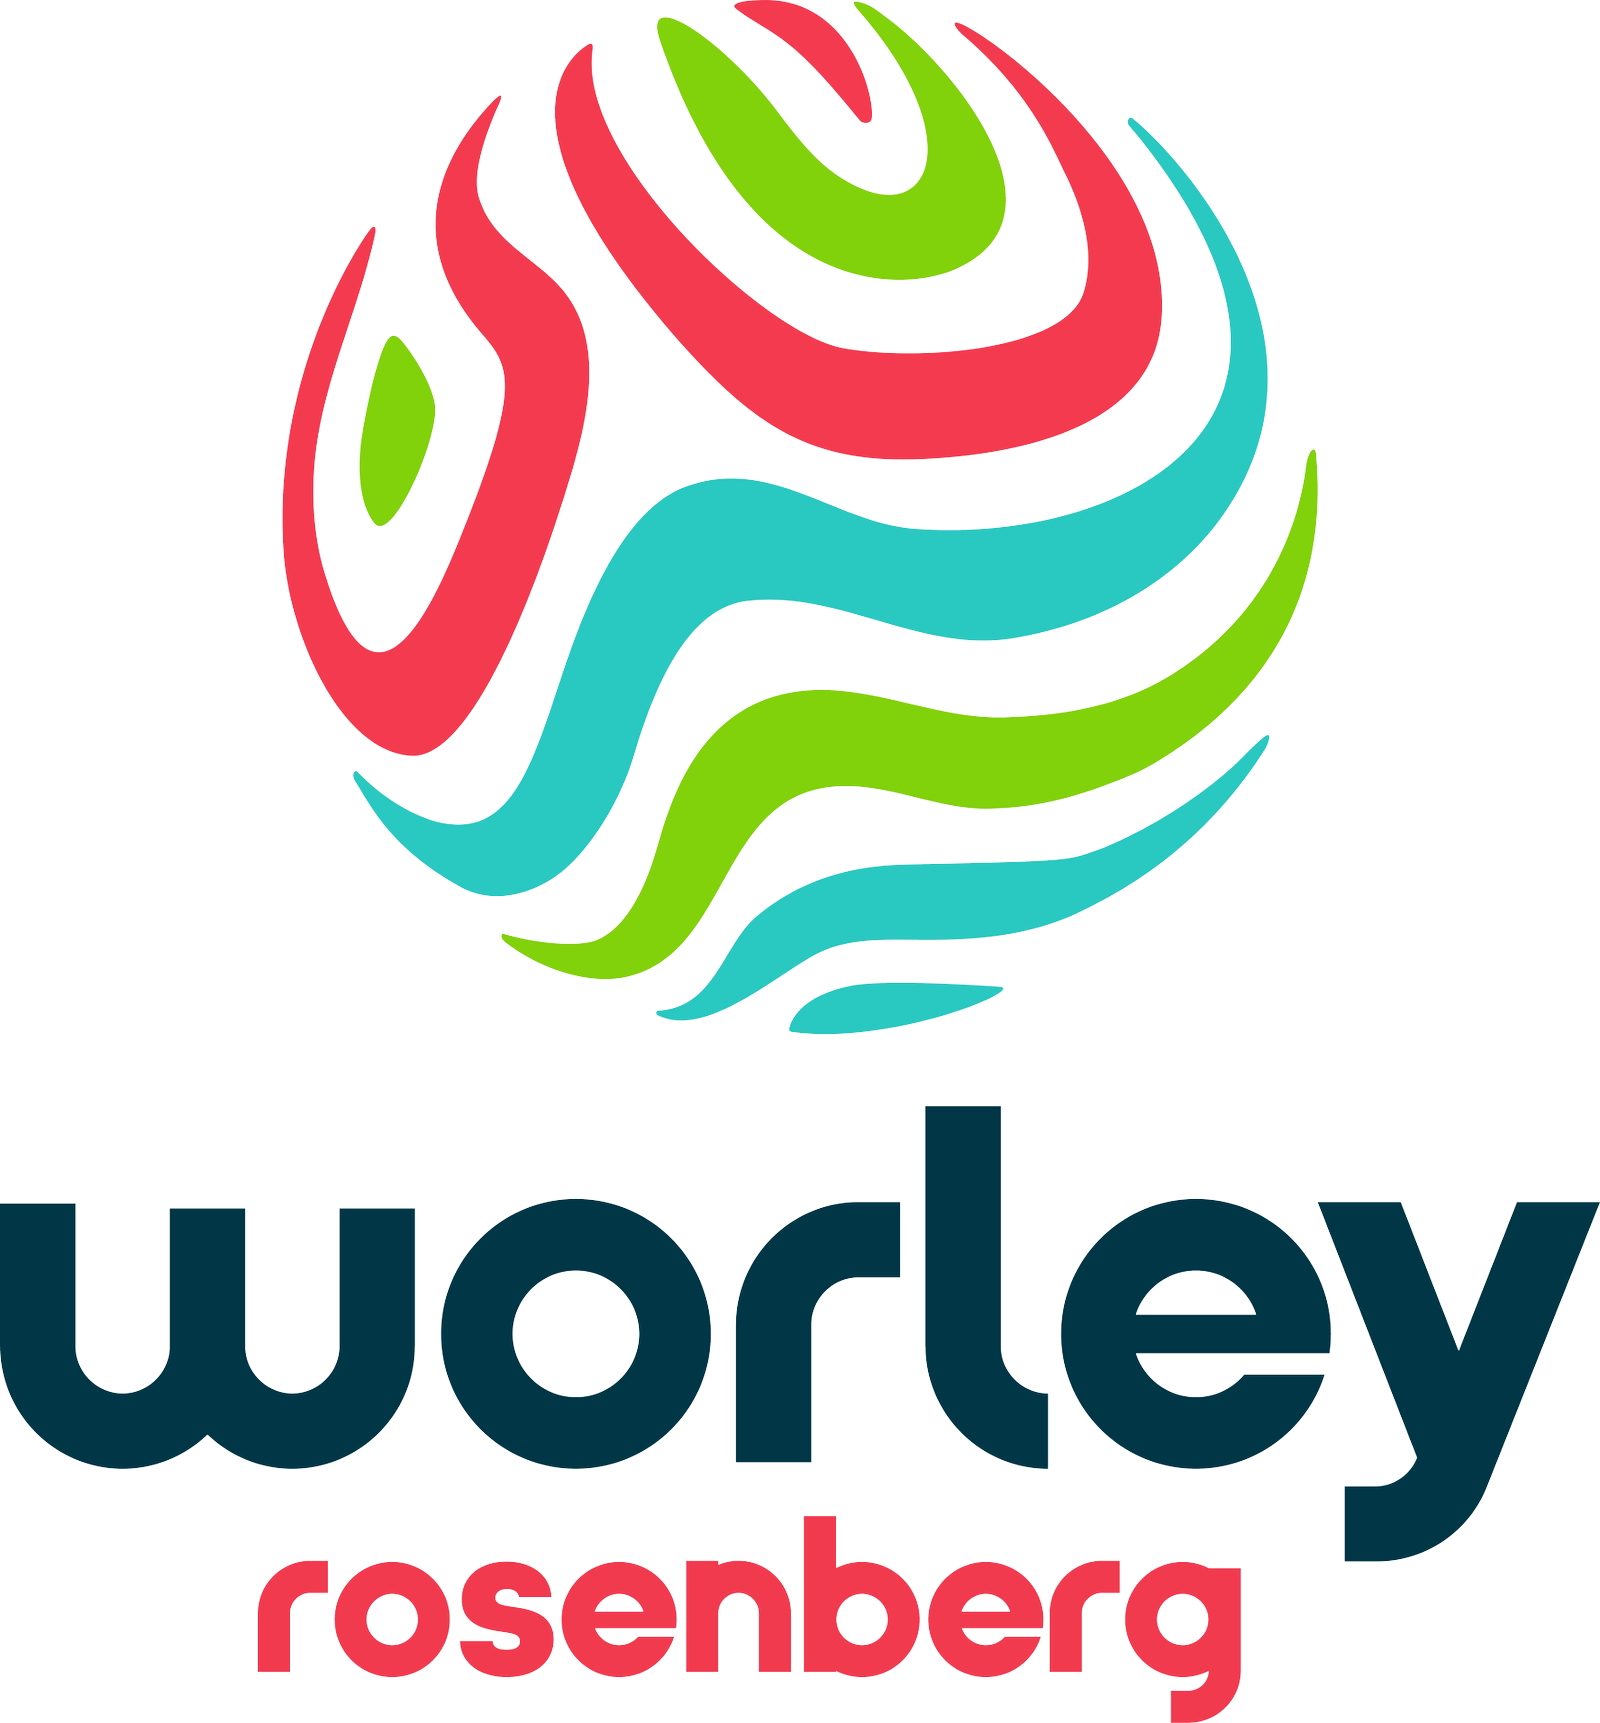 ROSENBERG WORLEY AS